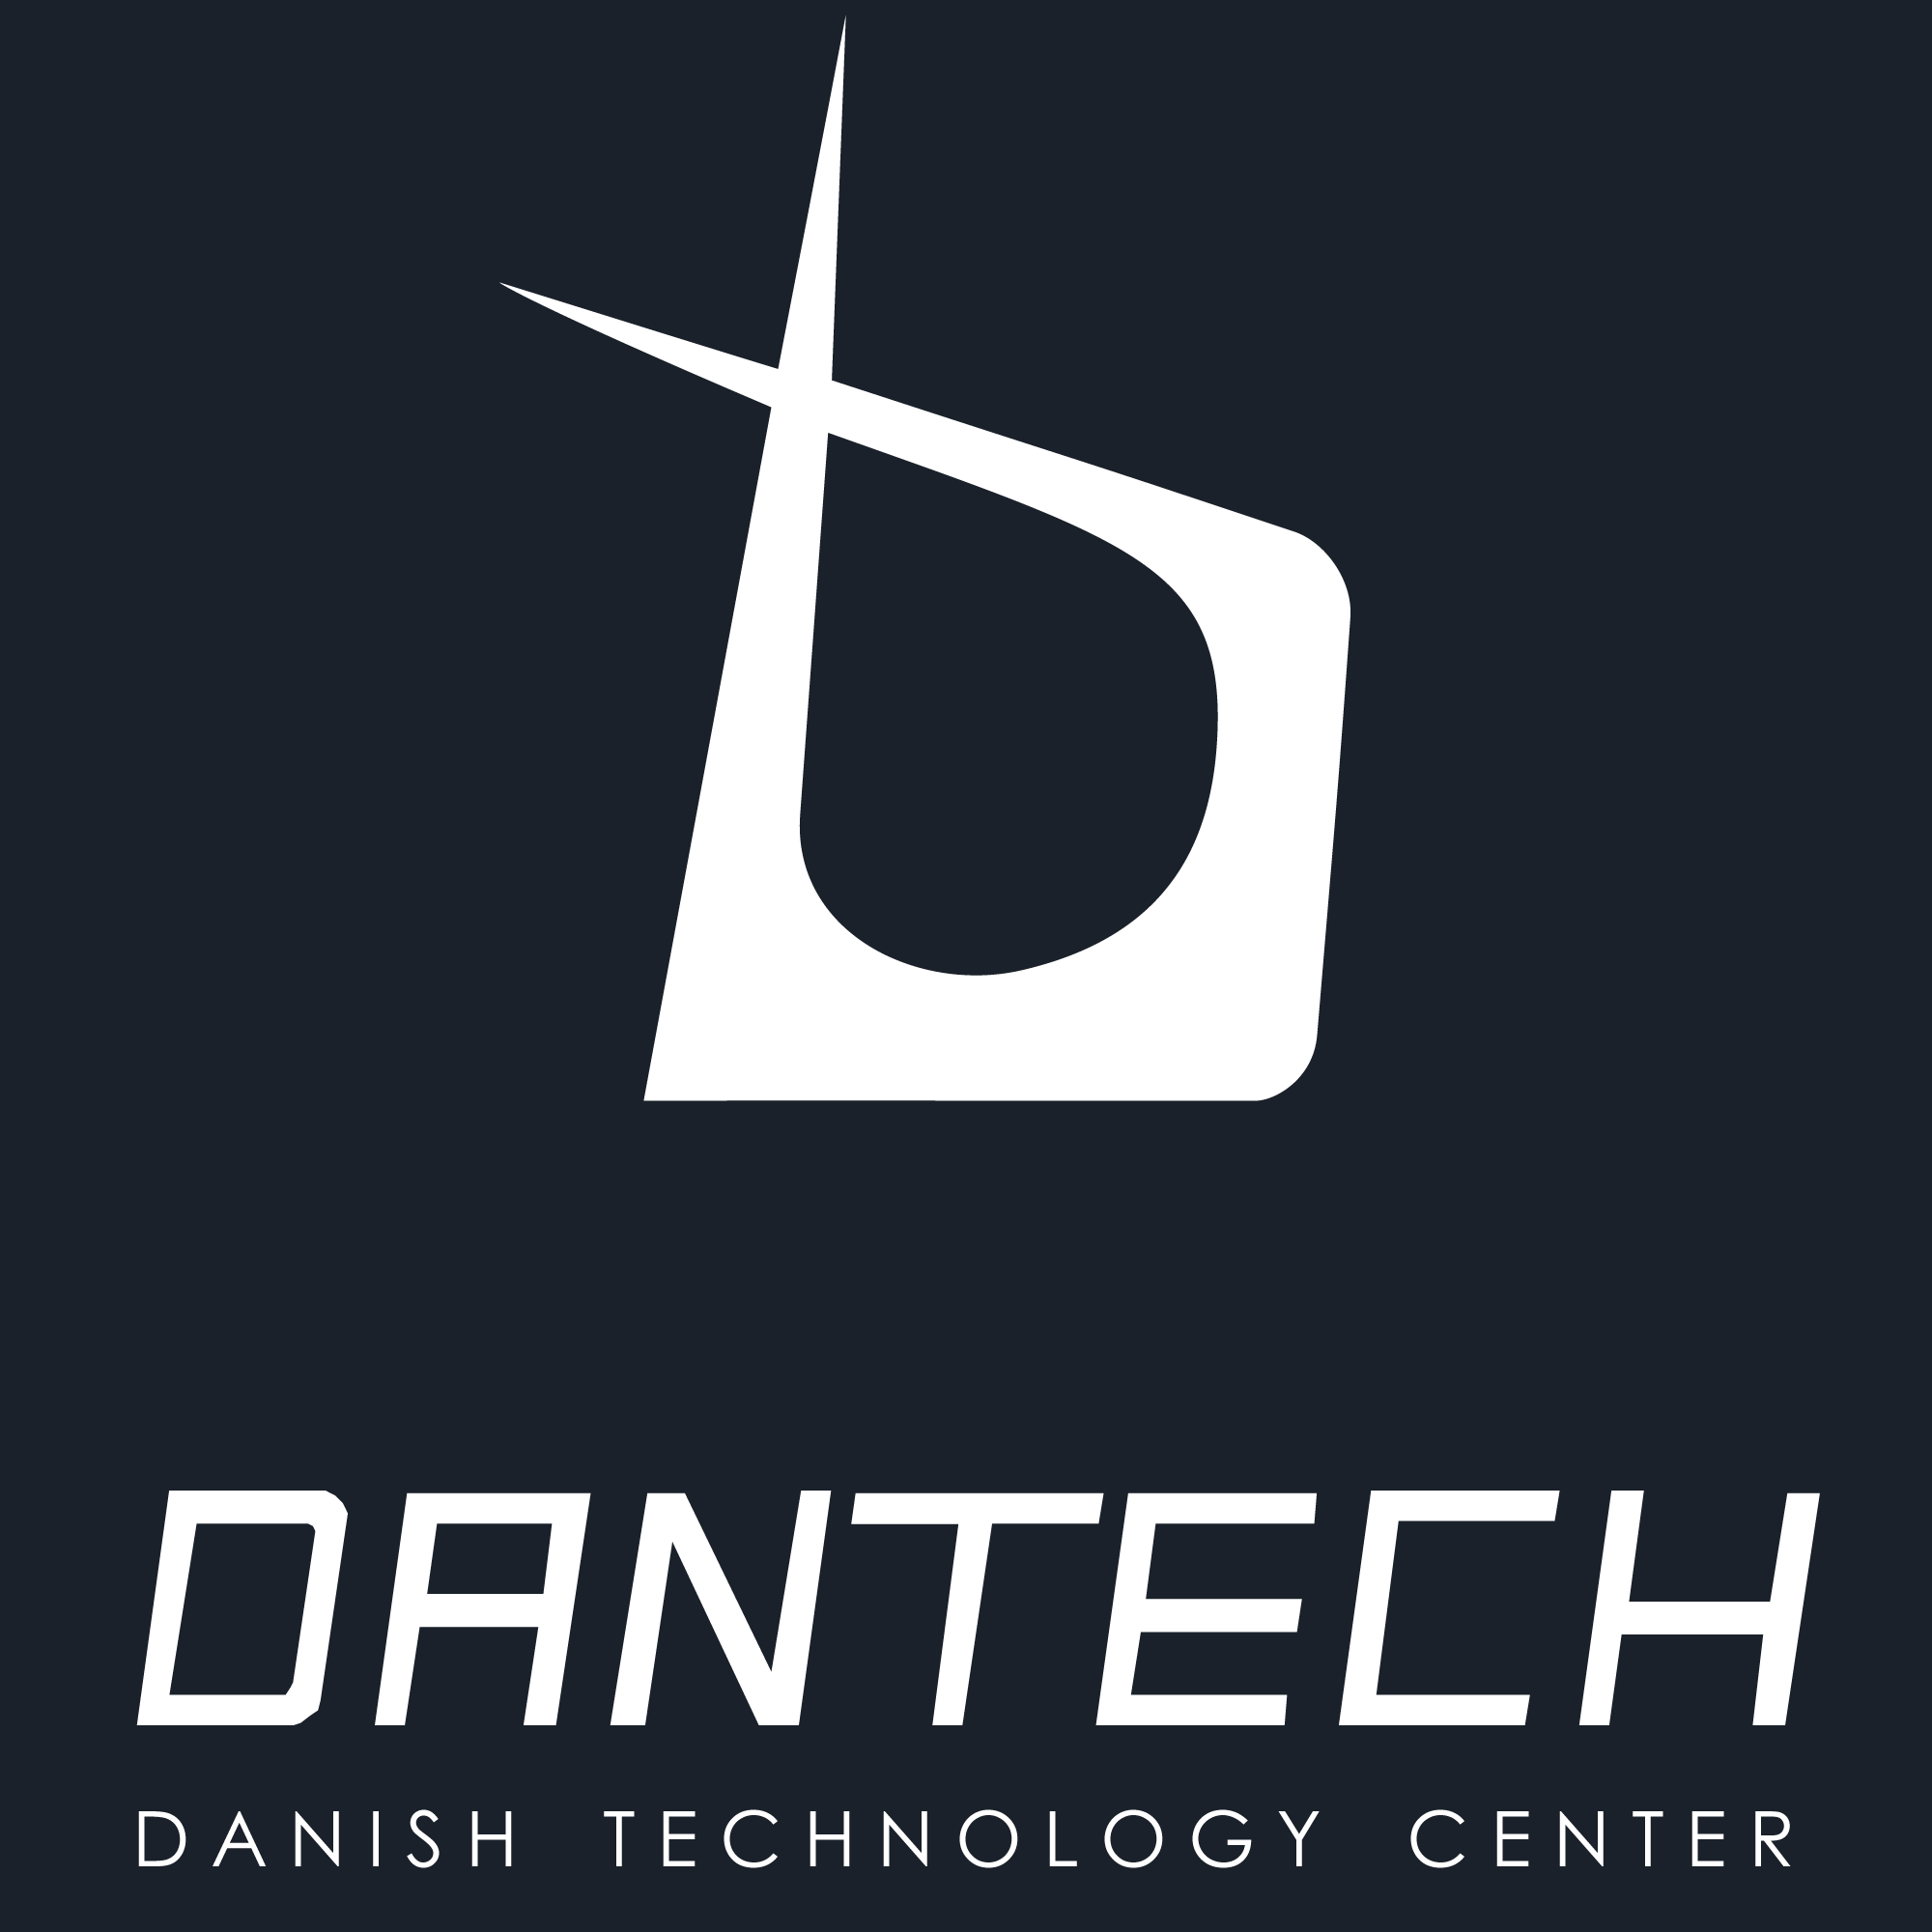 DANTECH – Danish Technology Center receives 2 international recognitions in one week